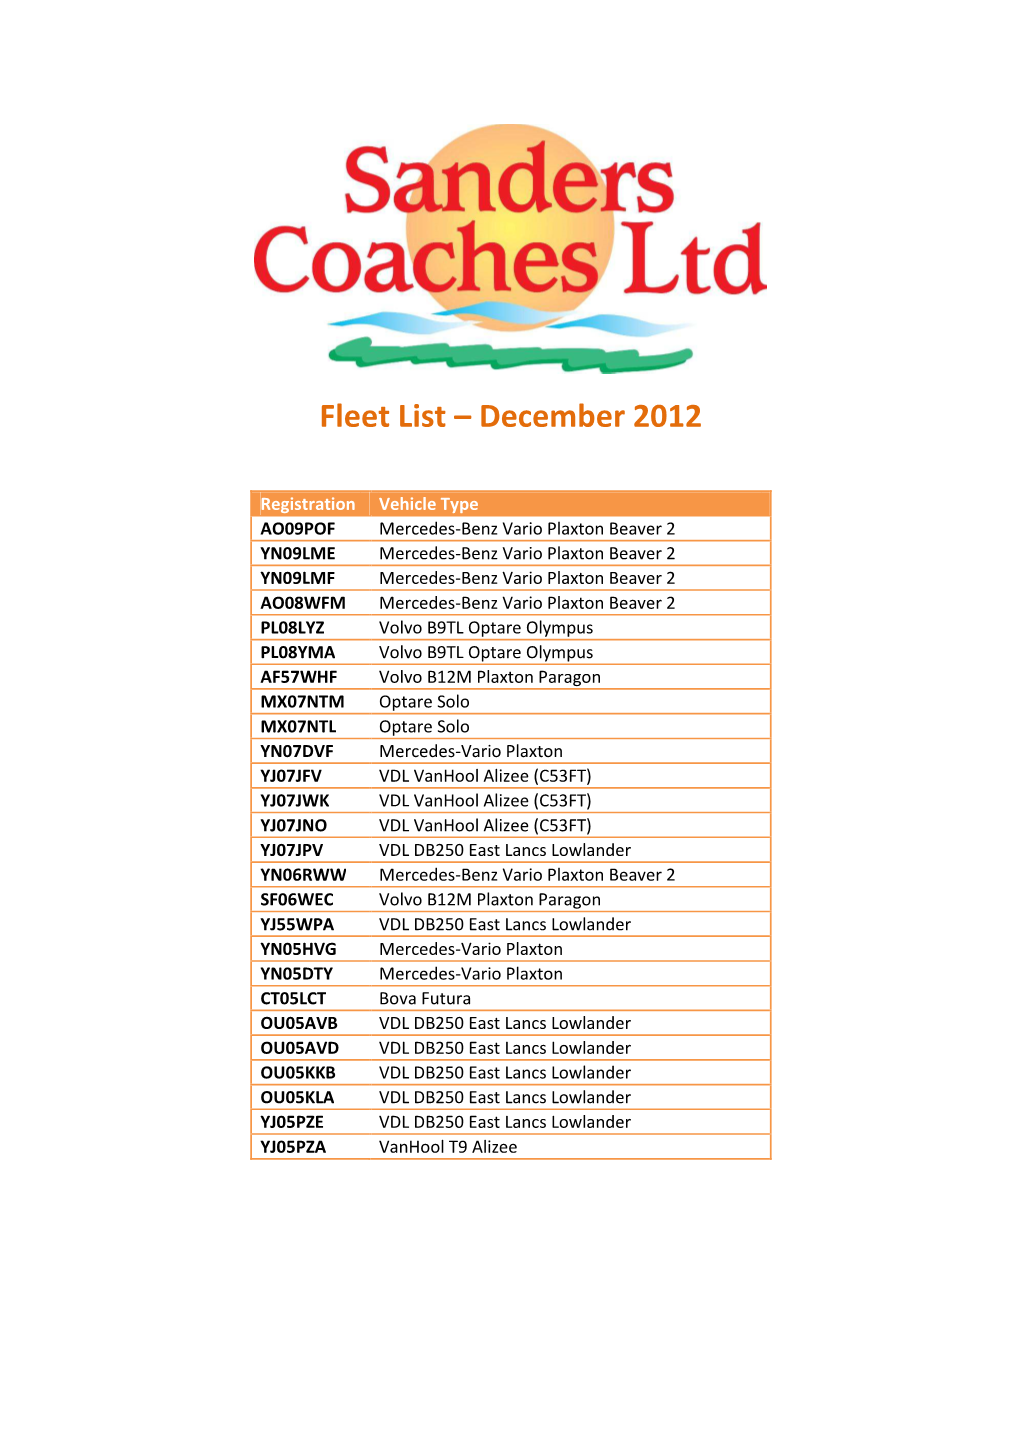 Sanders Coaches Fleet List December 2012